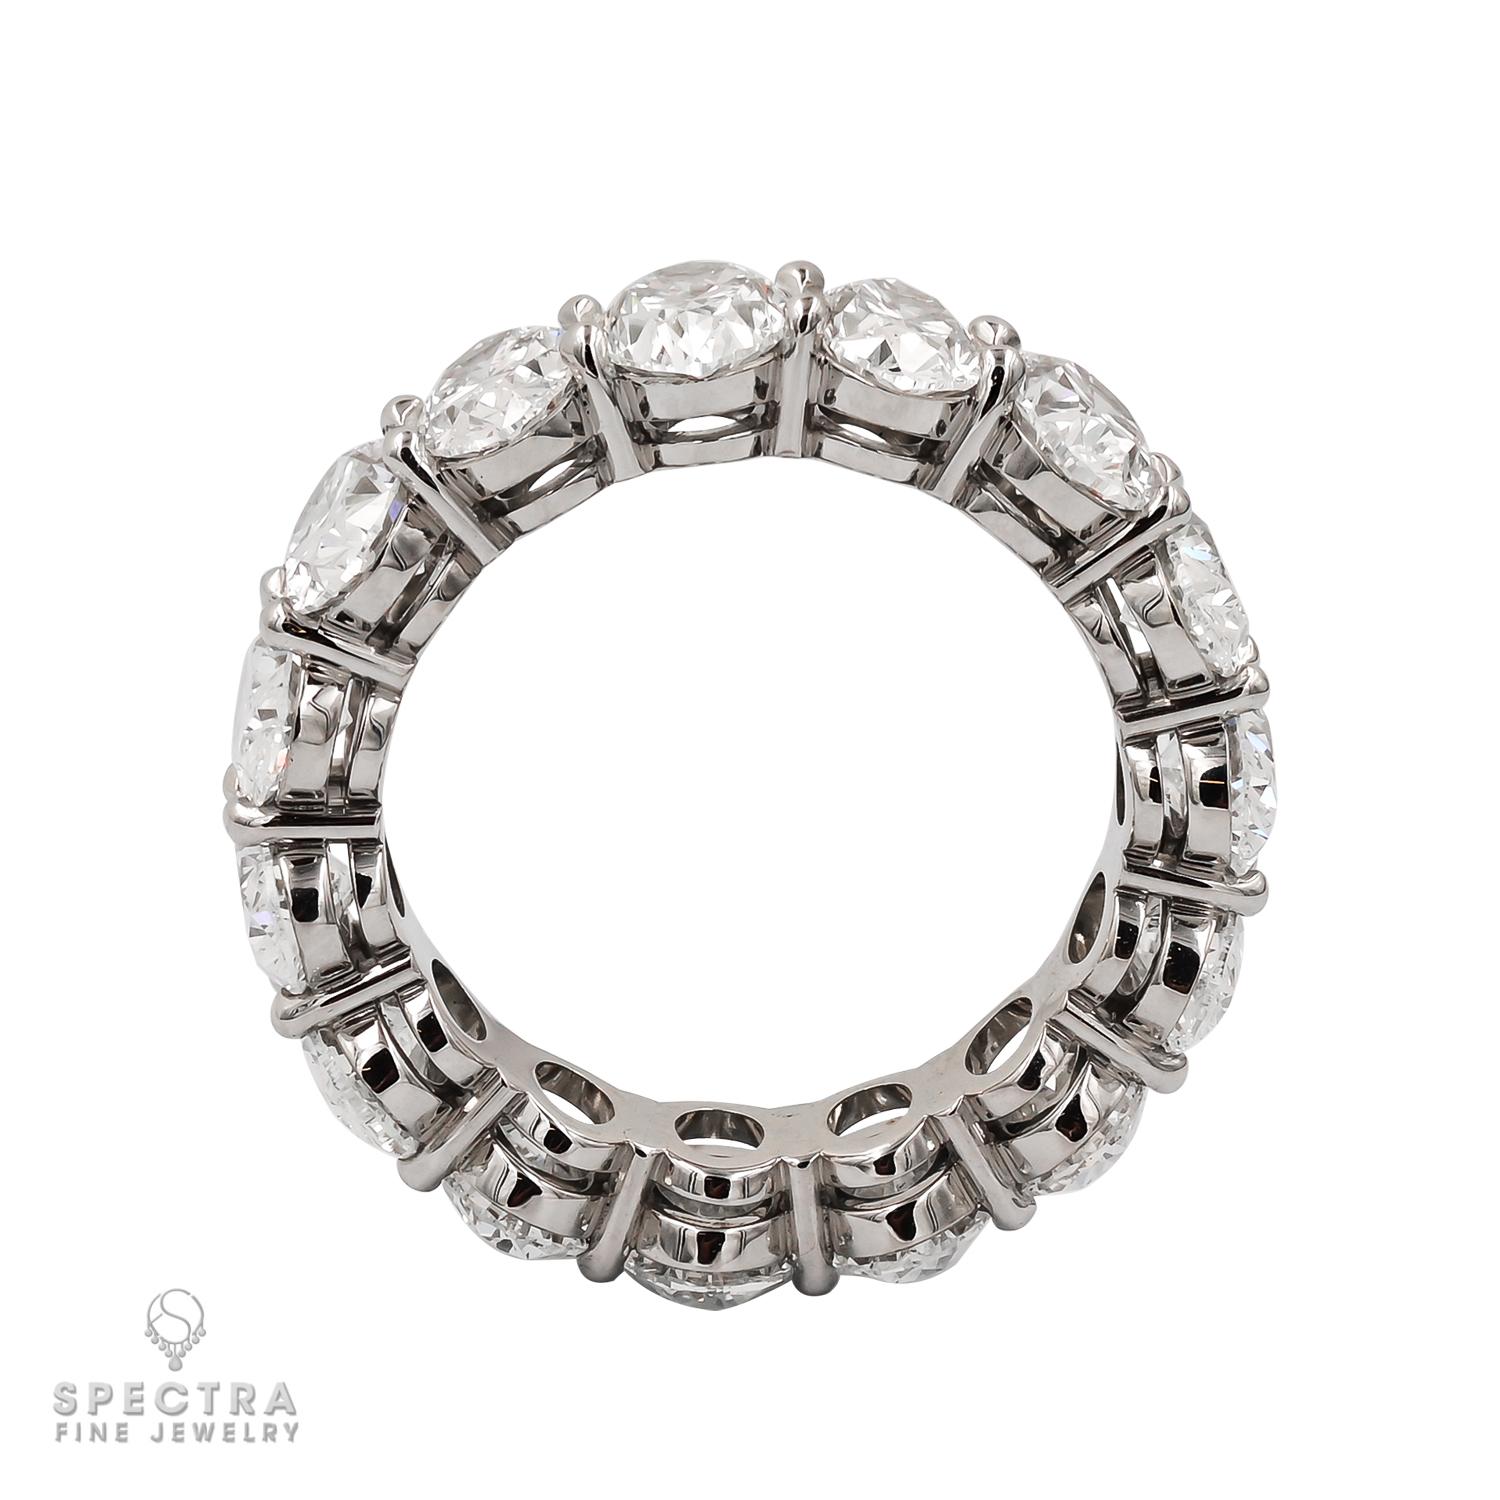 Contemporary Spectra Fine Jewelry 7.85 Carat Oval Diamond Eternity Band For Sale